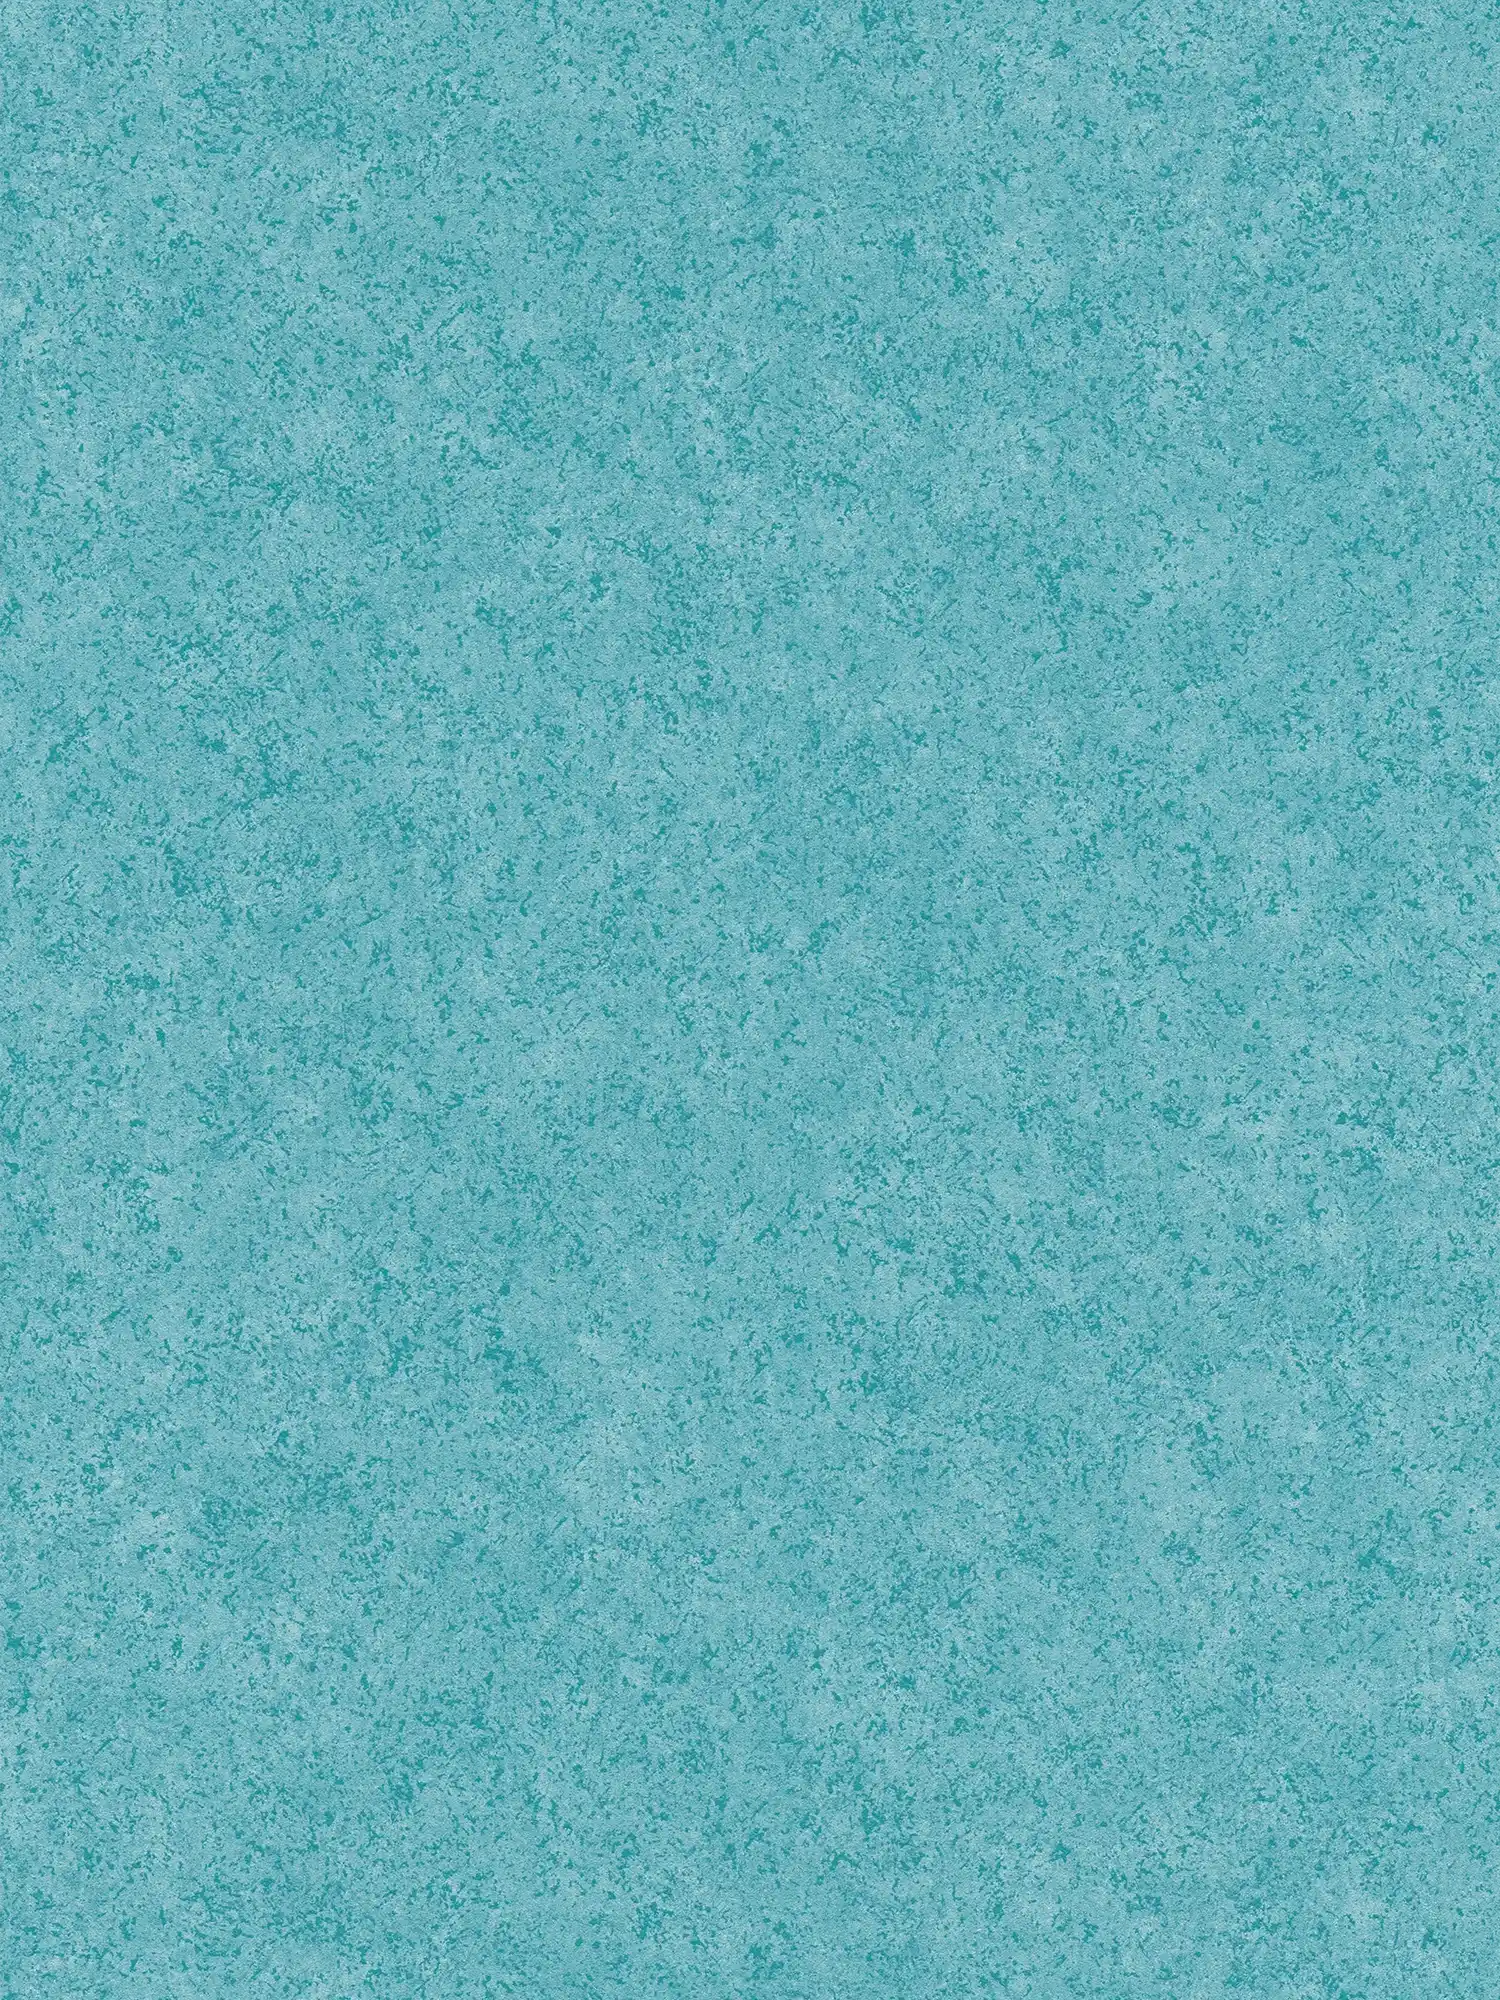         Vliestapete Petrol Putzoptik mit mattem Muster – Blau, Grün
    